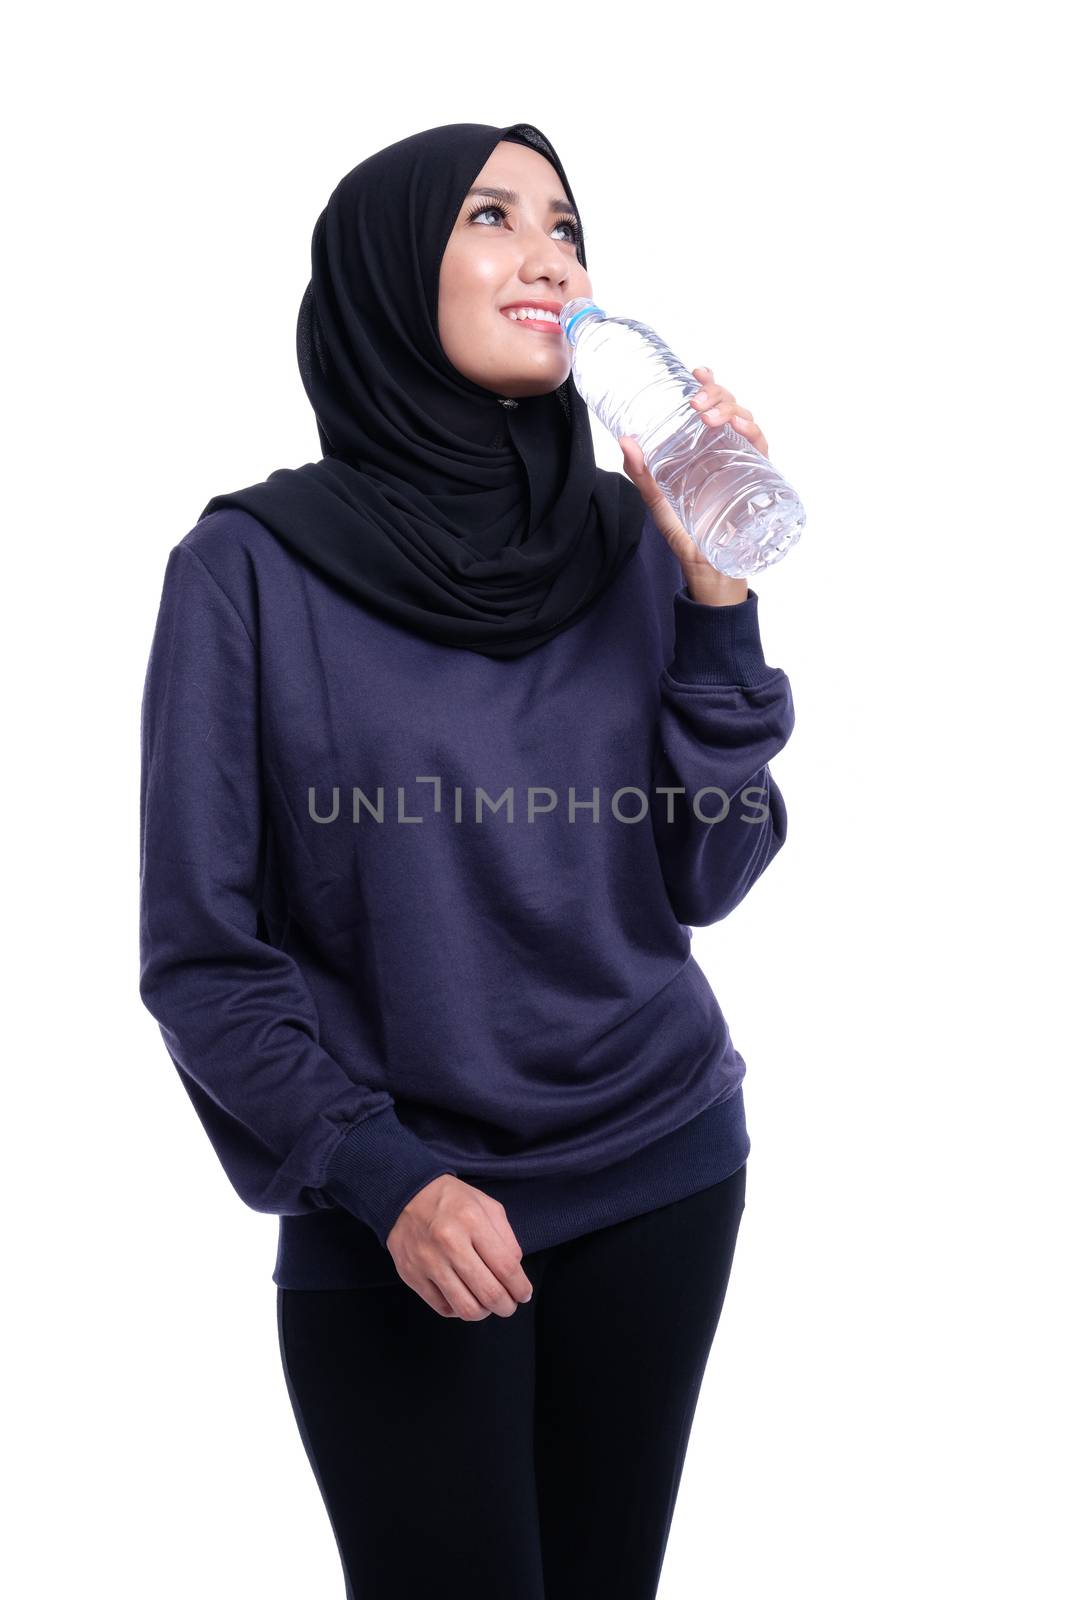 Pretty Muslim woman fitness lifestyle. by alkansari2020